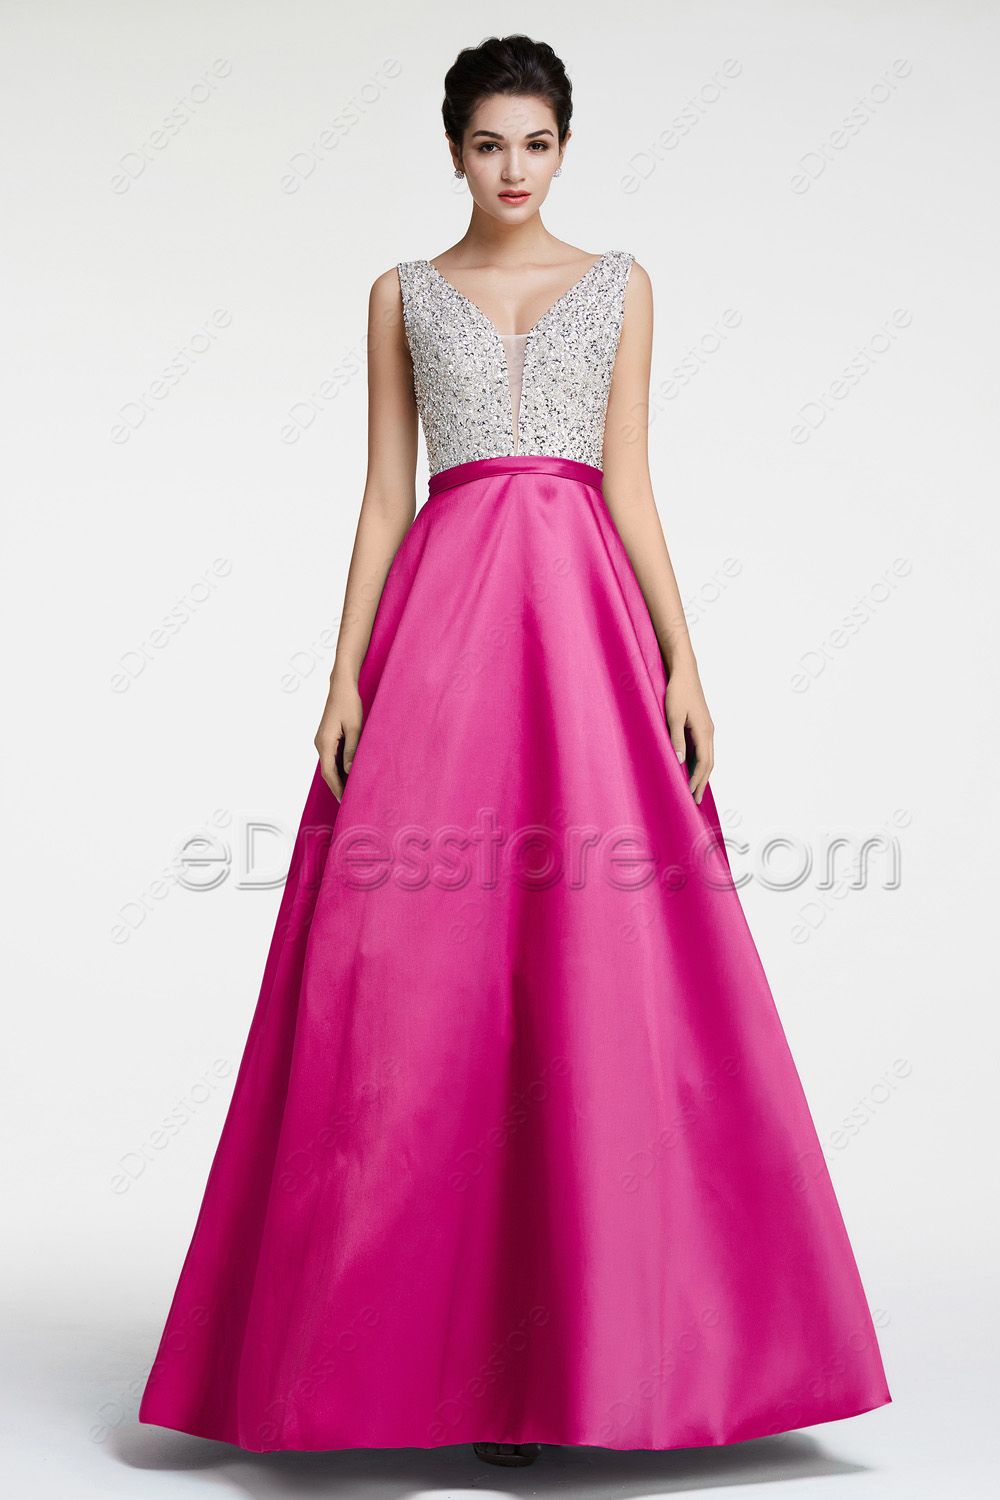 Beaded Crystal Hot Pink Evening Dresses Edresstore